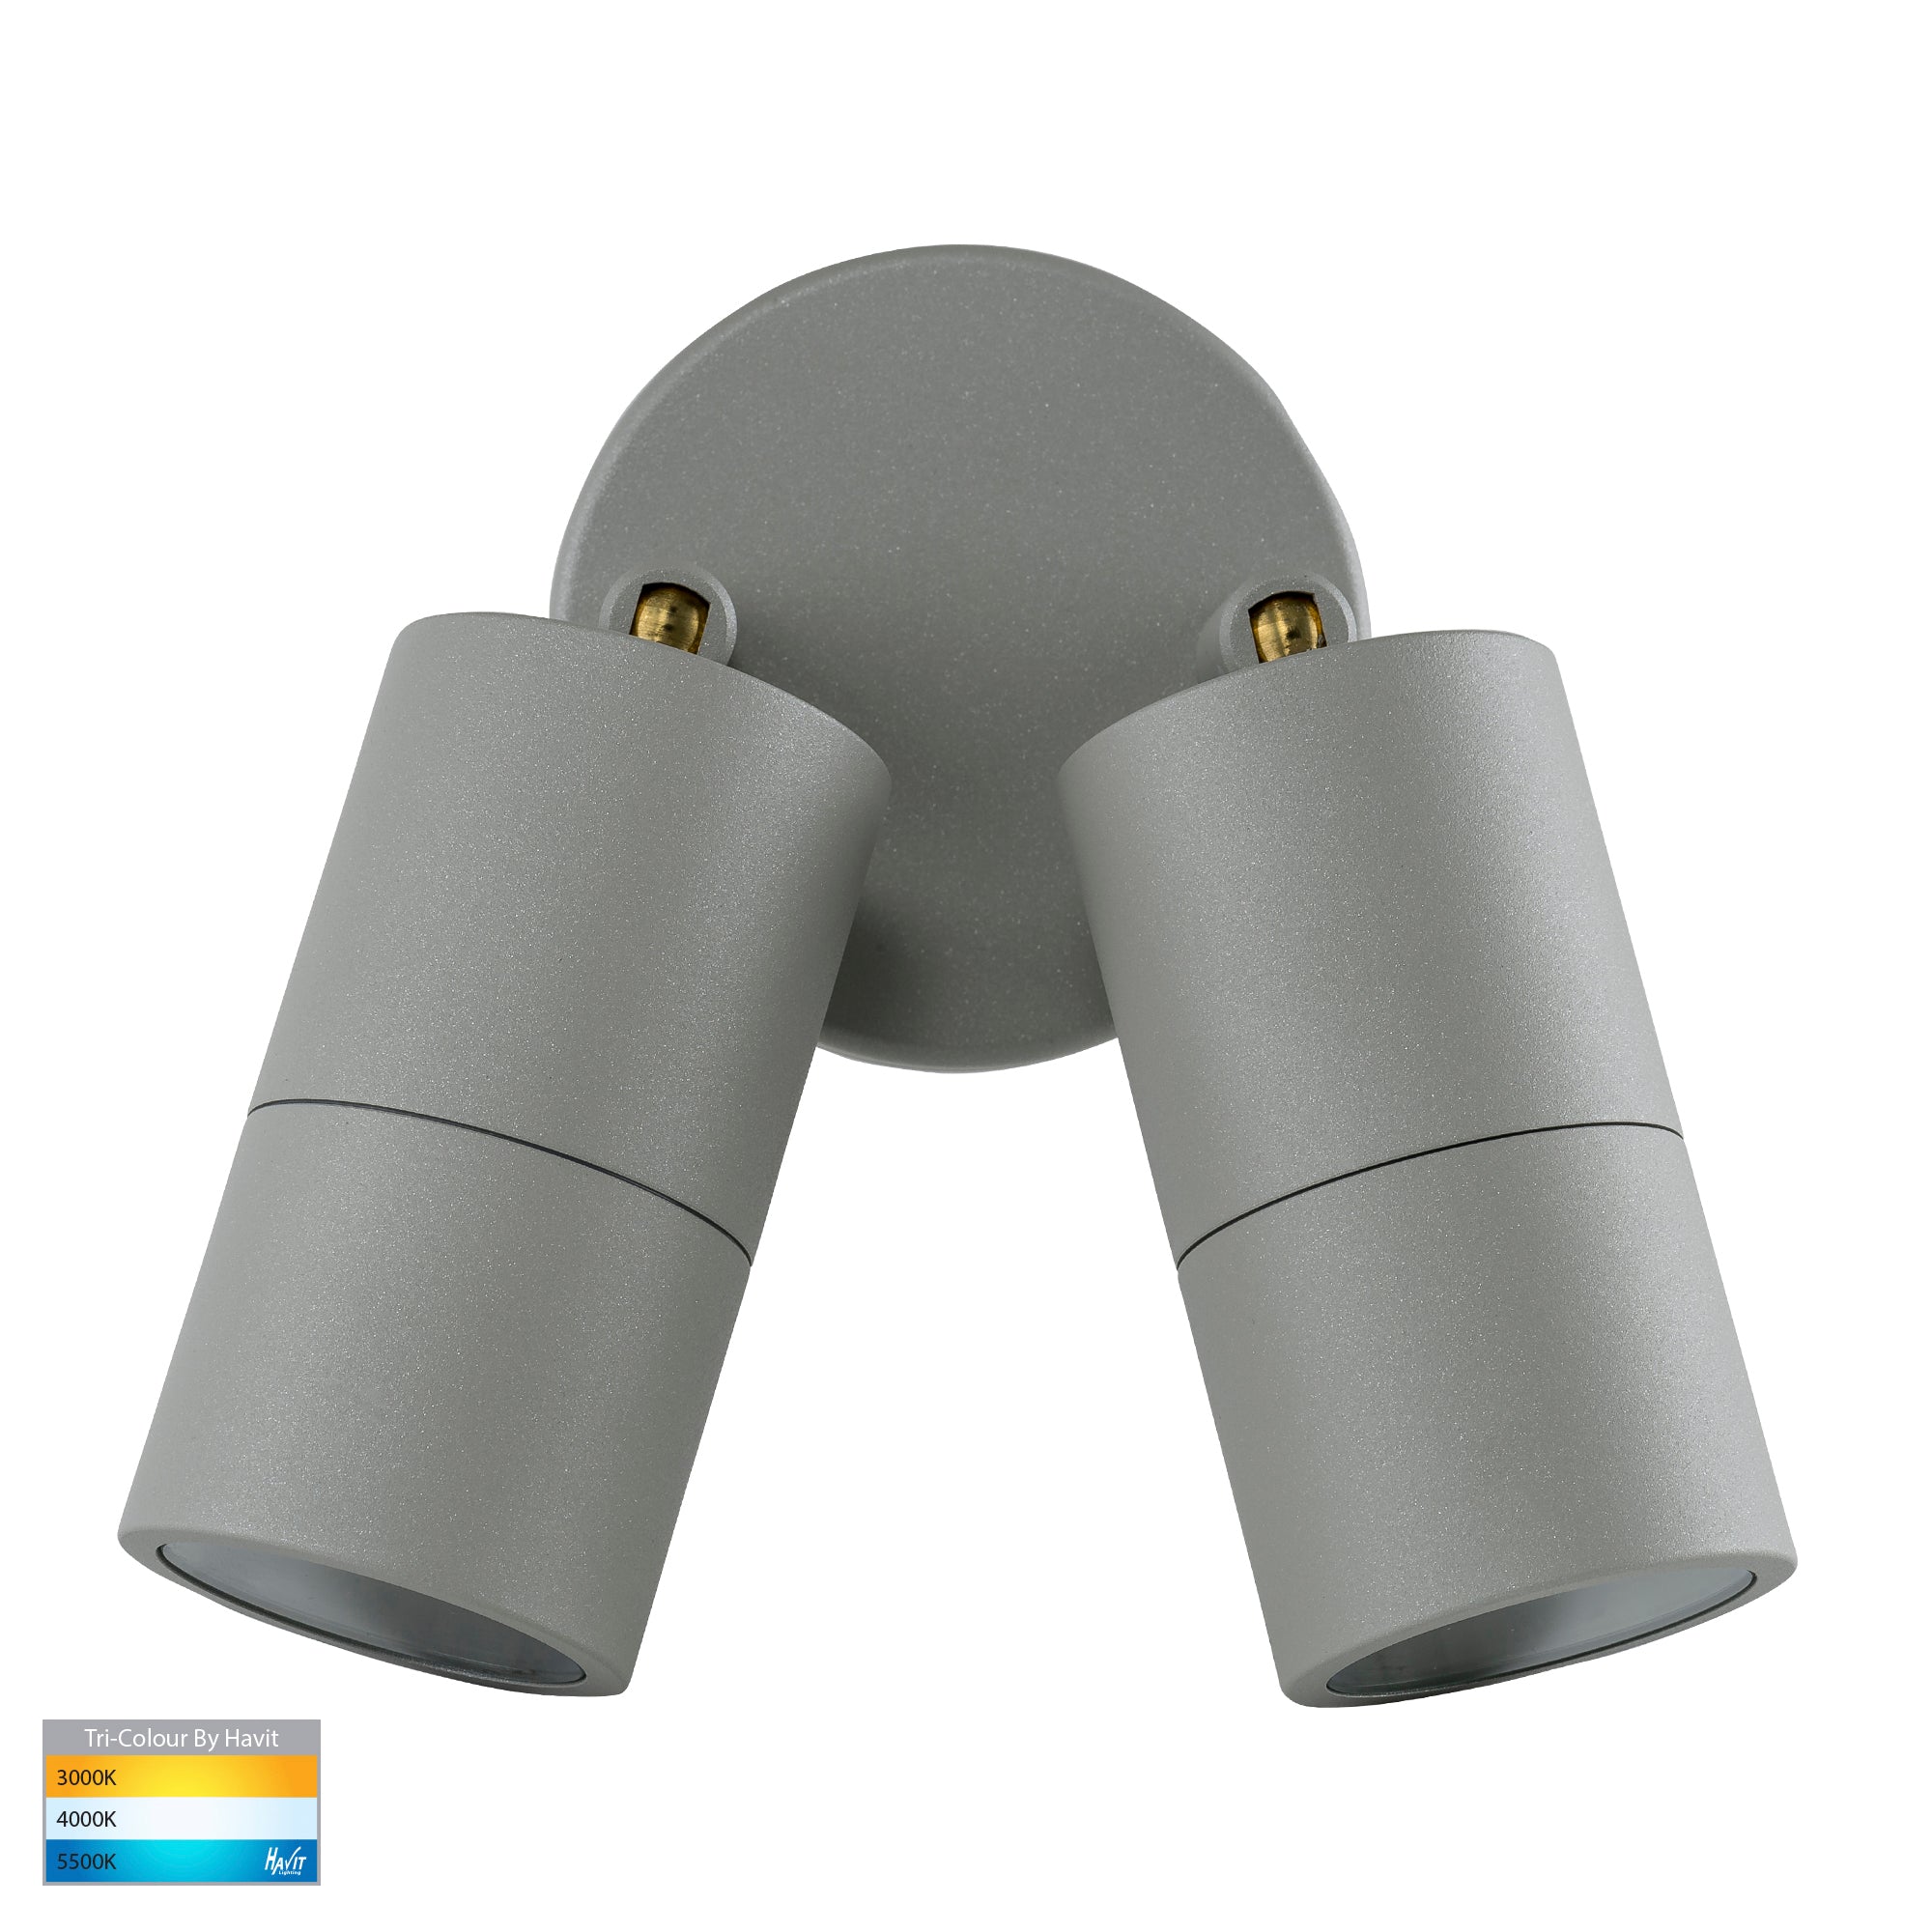 HV1345T-HV1347T - Tivah Silver TRI Colour Double Adjustable Wall Pillar Lights